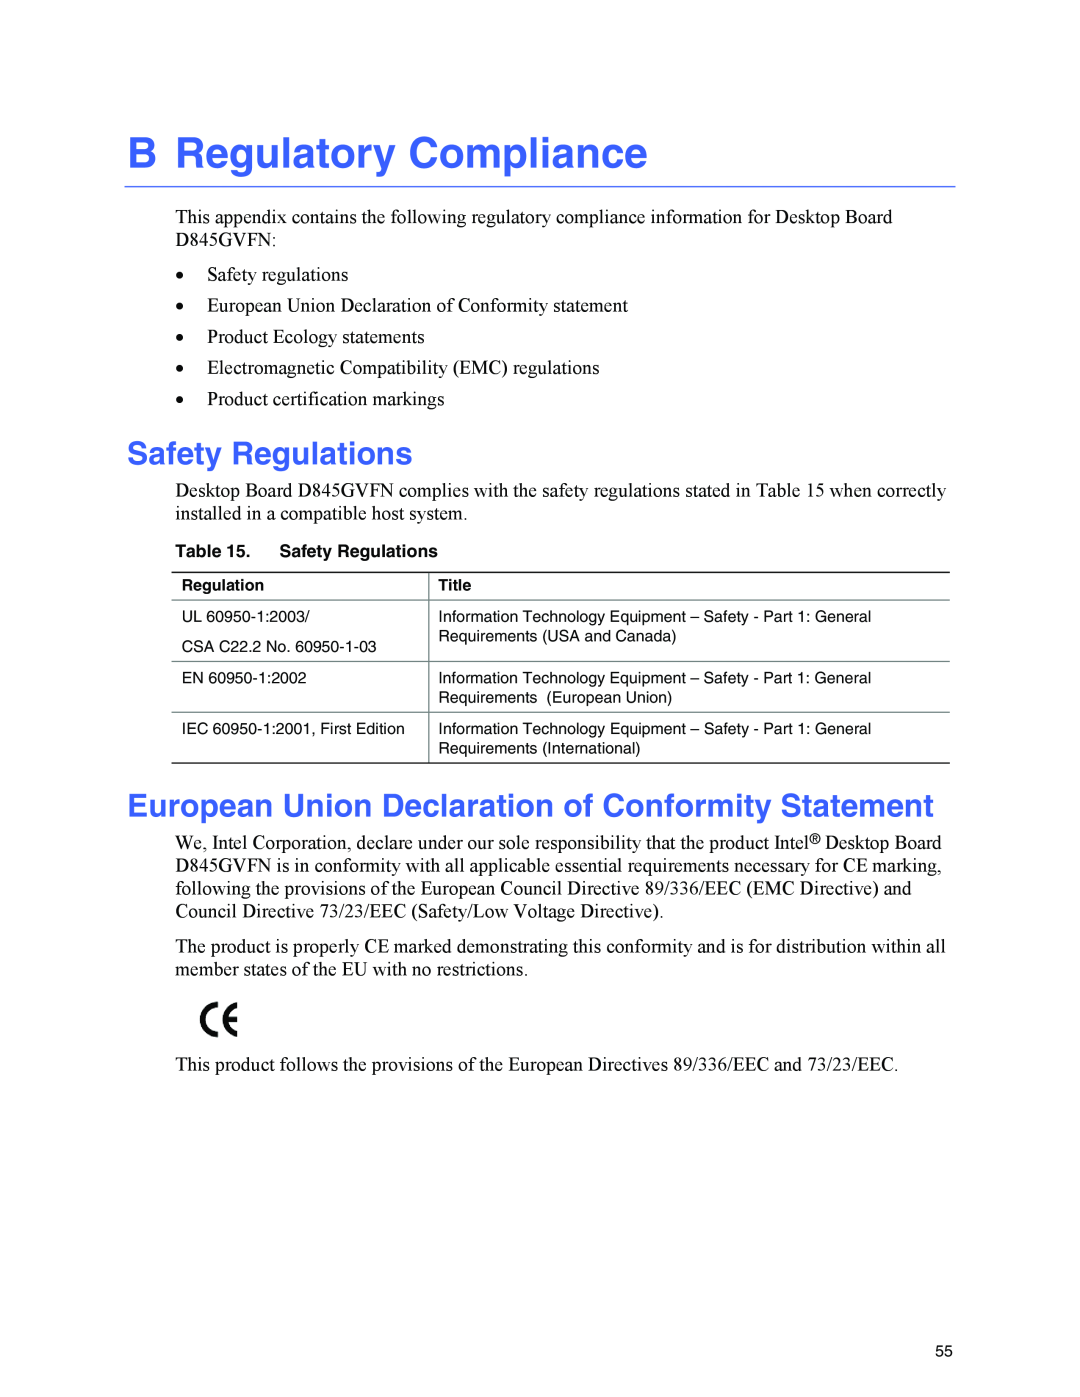 Intel D845GVFN manual B Regulatory Compliance, Safety Regulations 